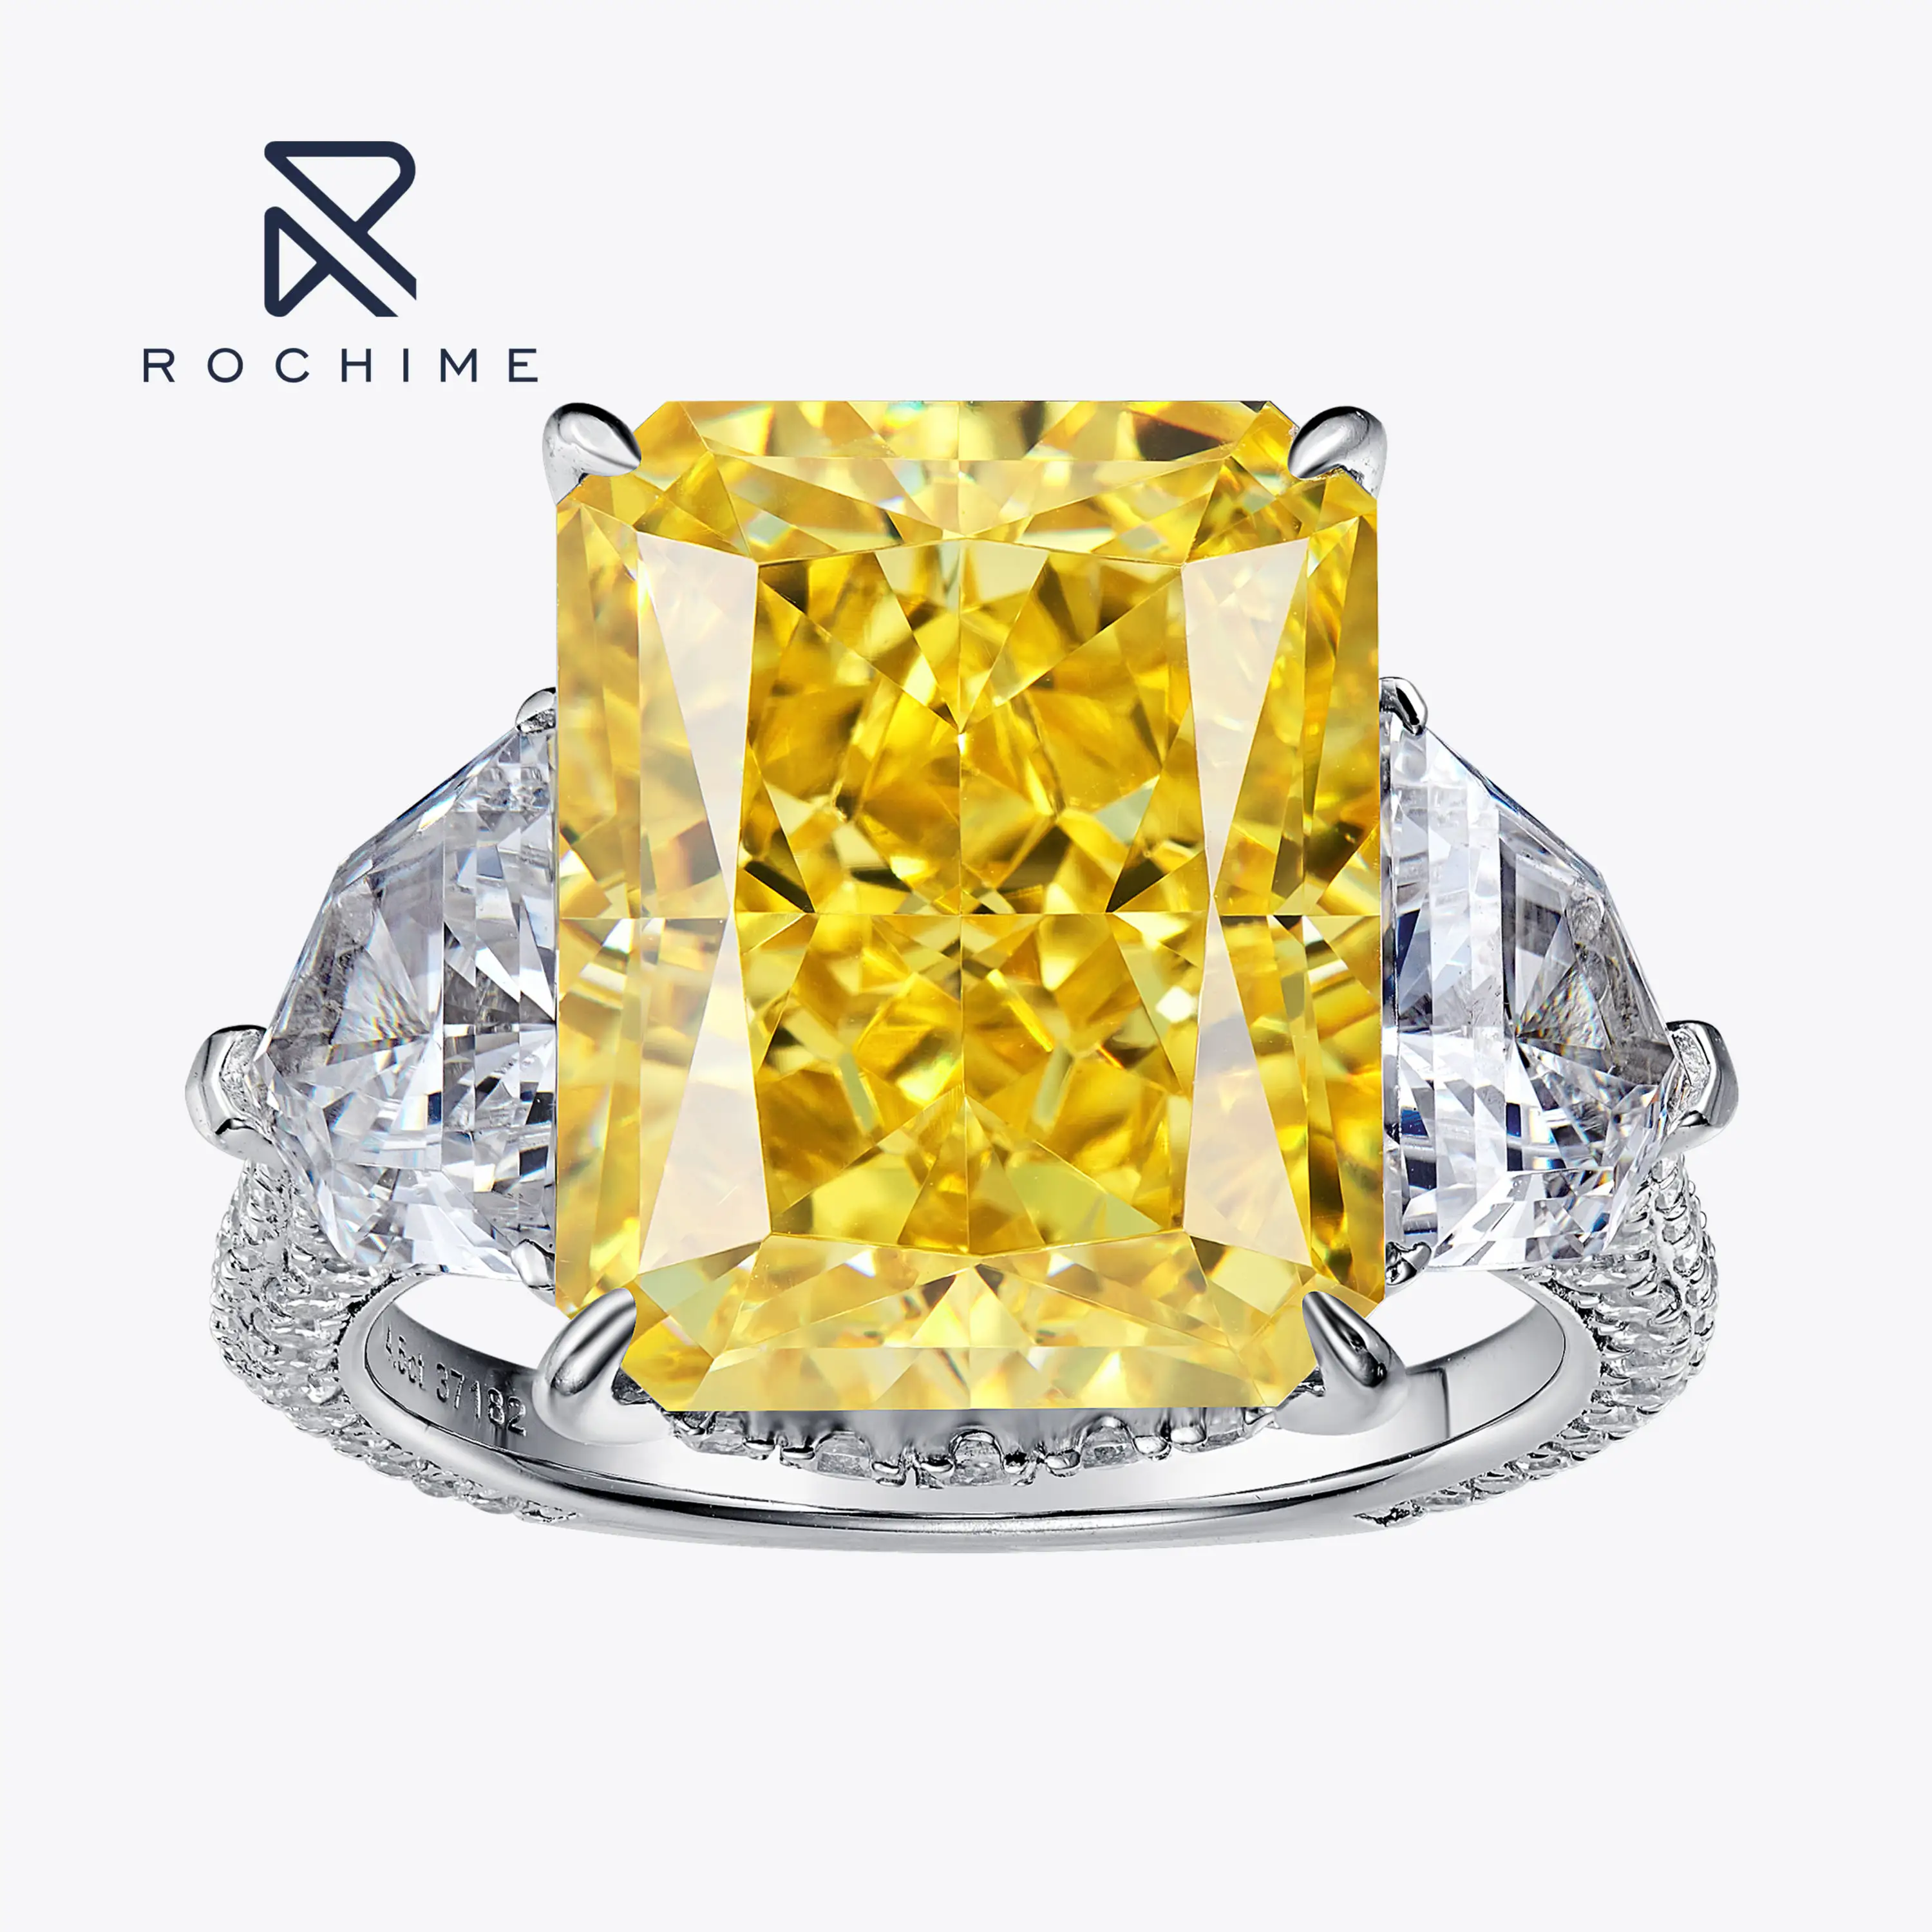 Rochime Luxus gelben Edelstein cz Diamantringe versilbert Zirkon feinen Schmuck Ring Frauen vergoldet